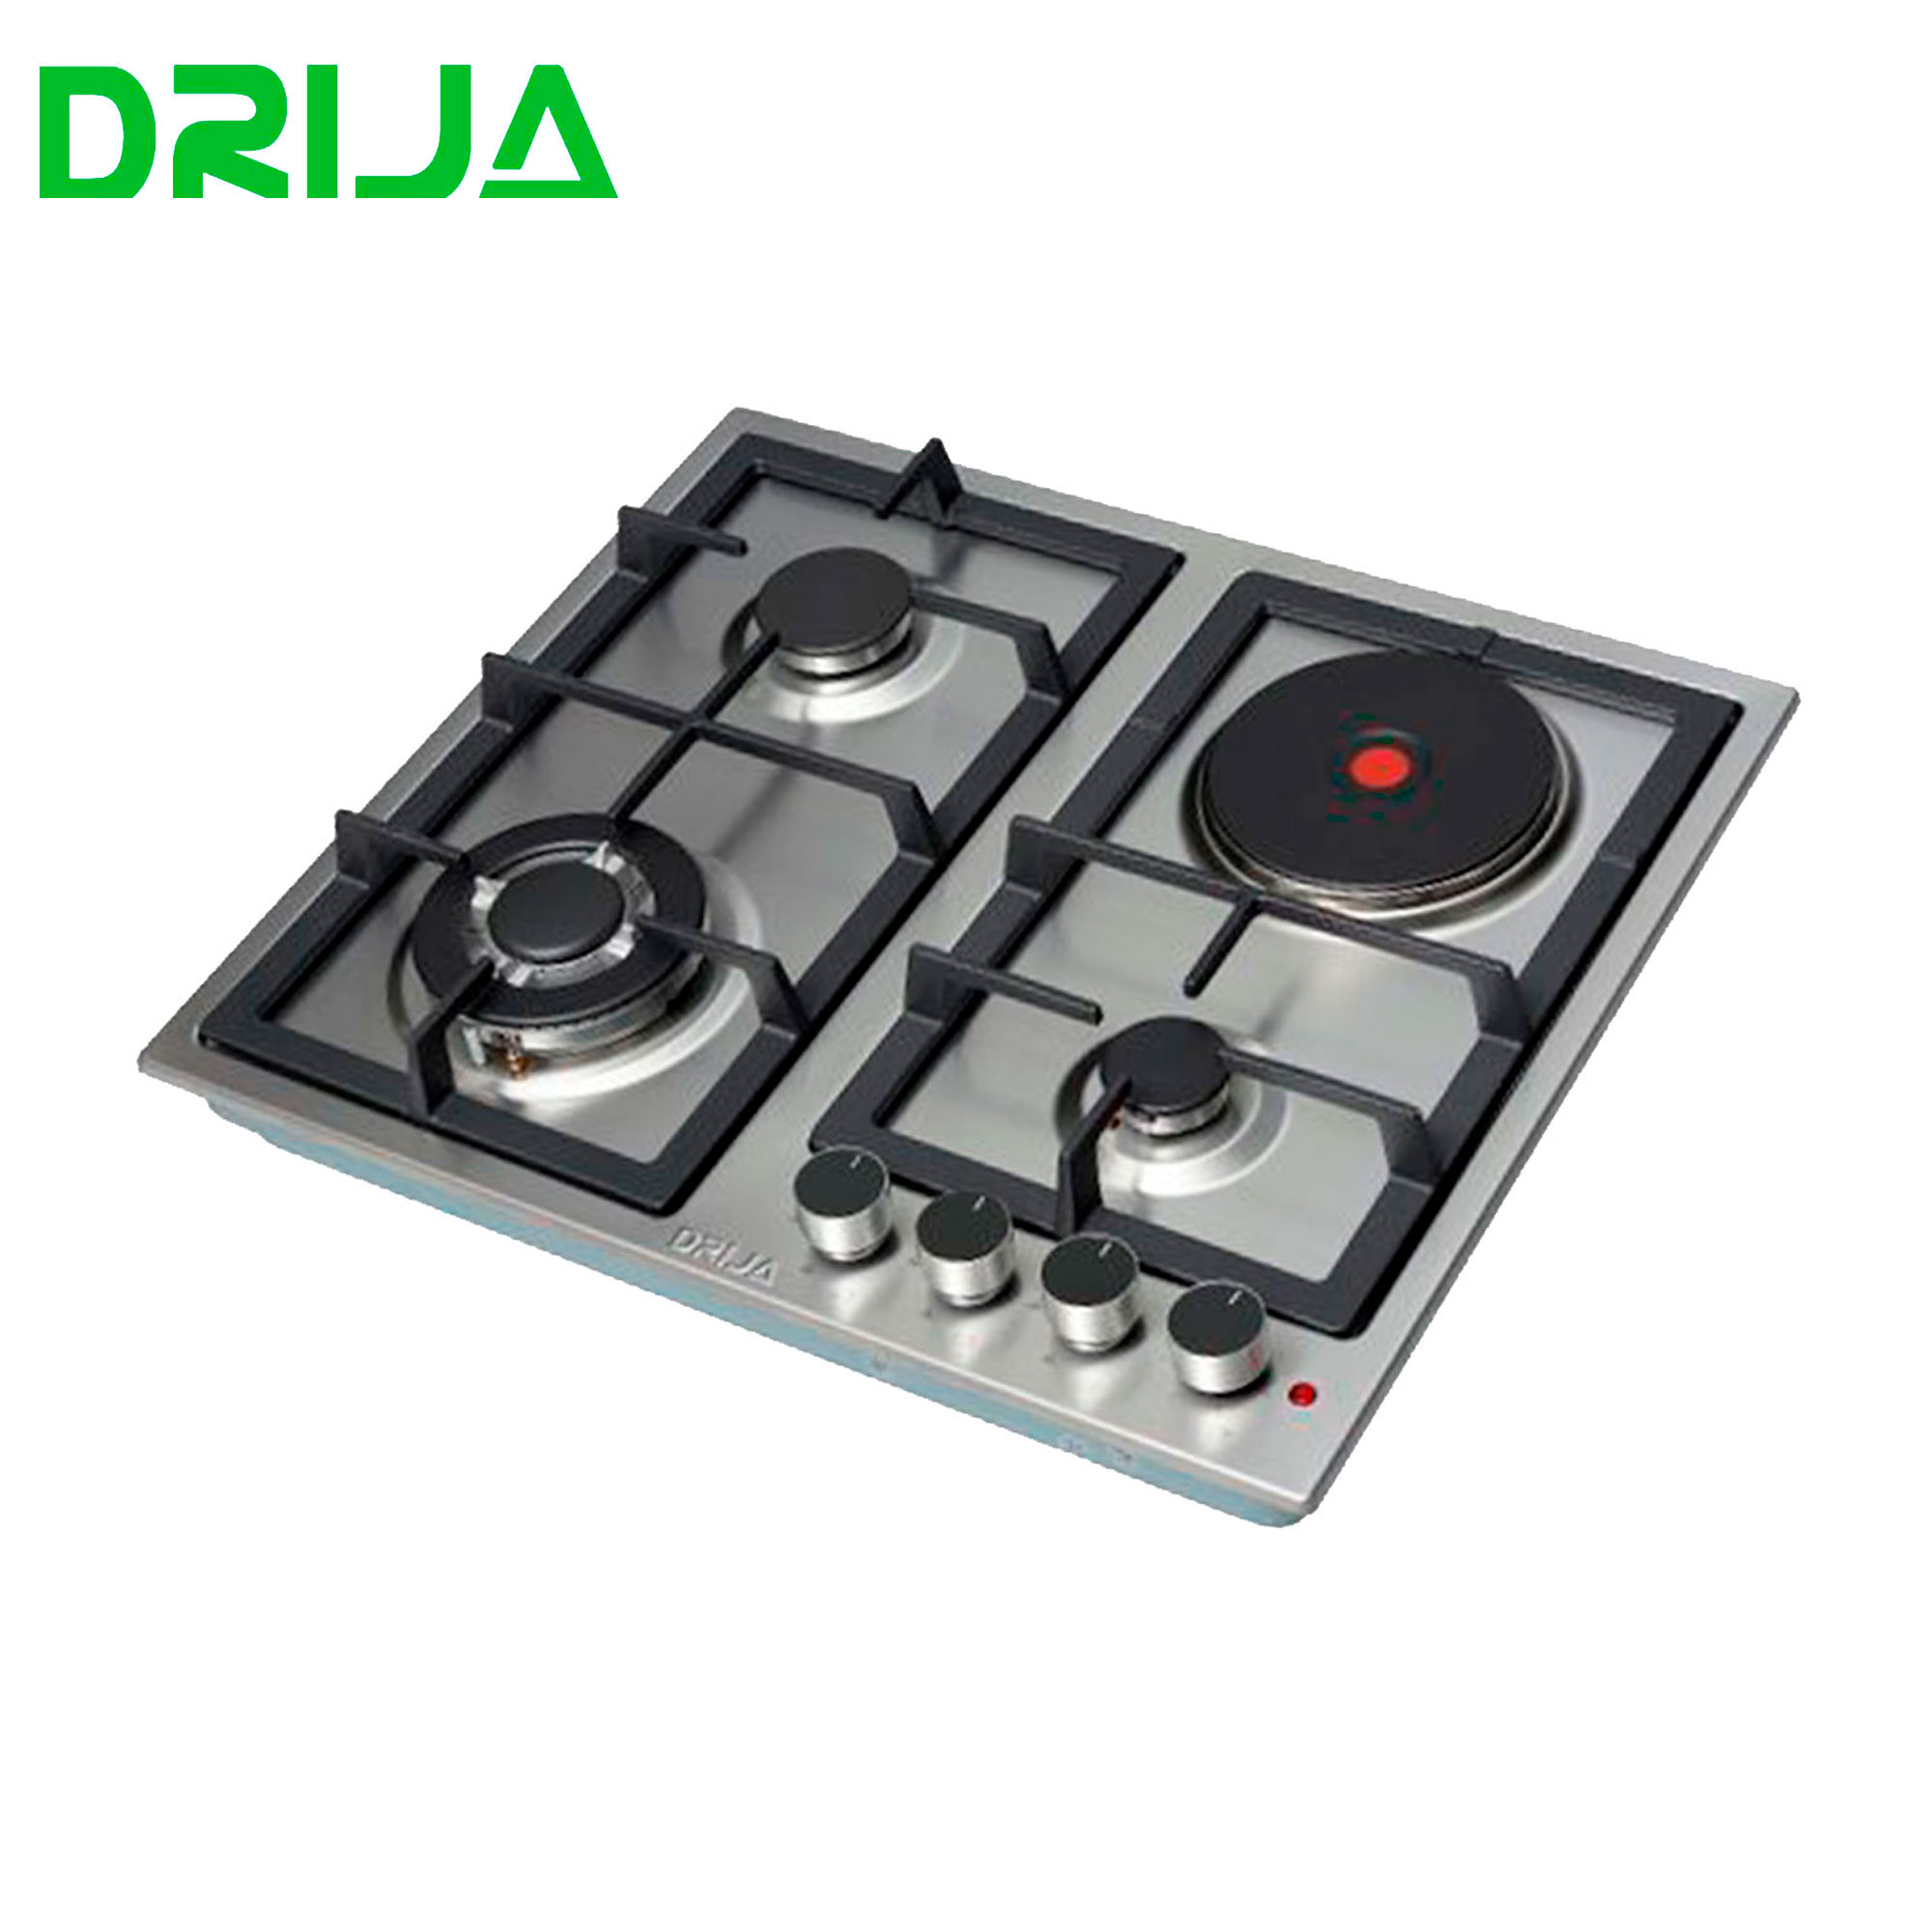 Tope de cocina dual Drija 60cm - Multimax Store